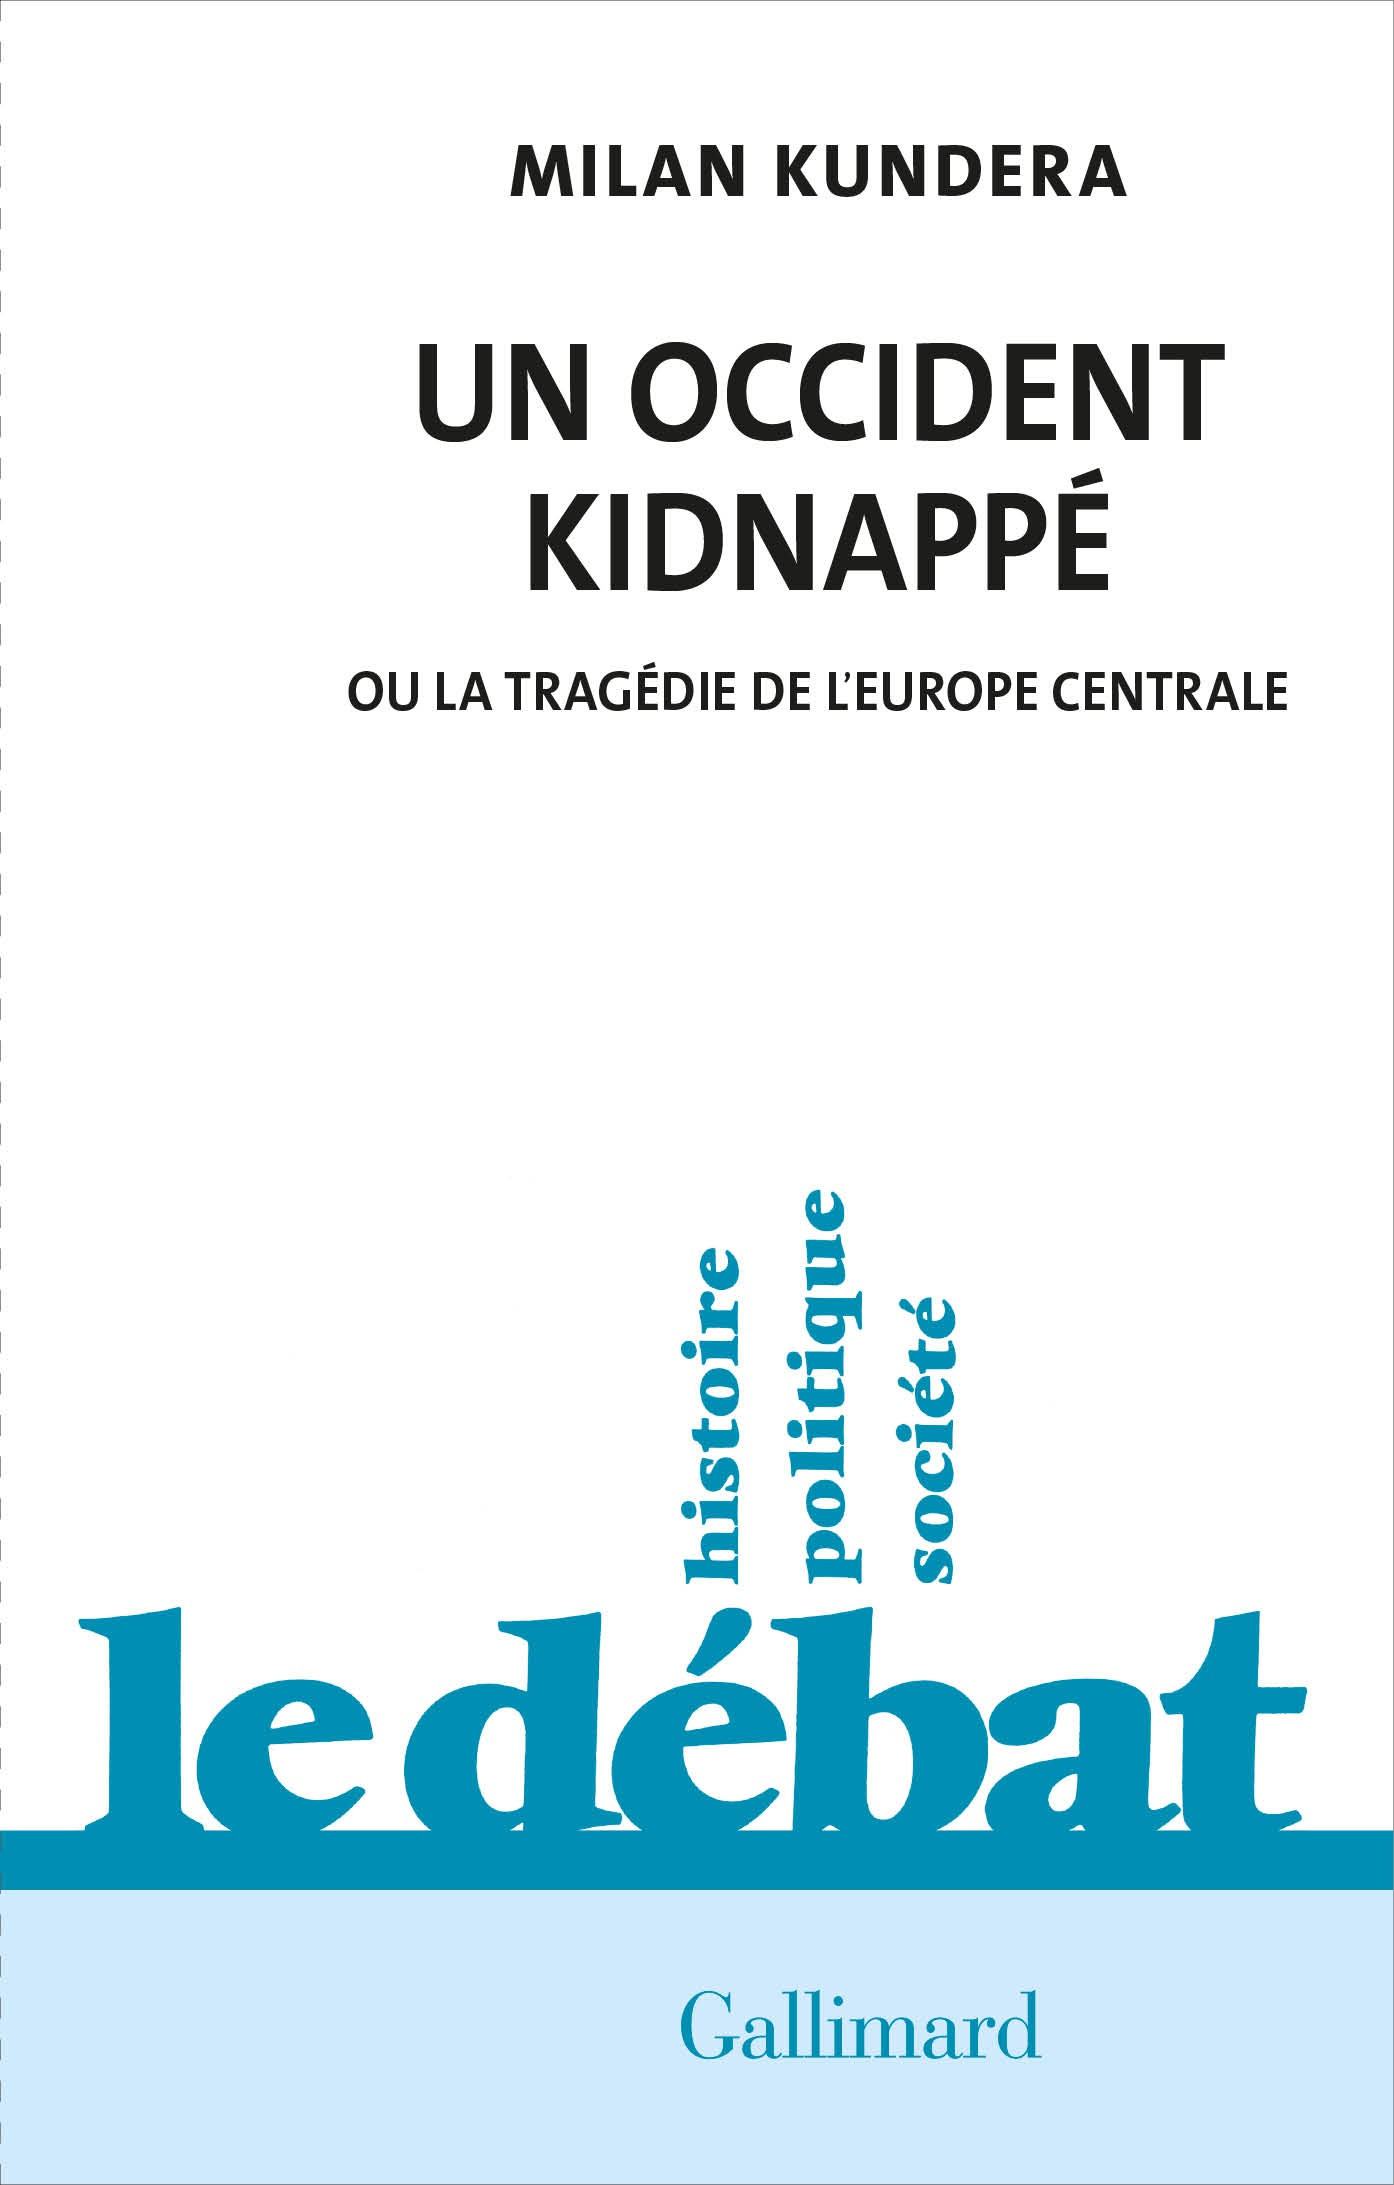 Un Occident kidnappé - Milan Kundera | Cairn.info